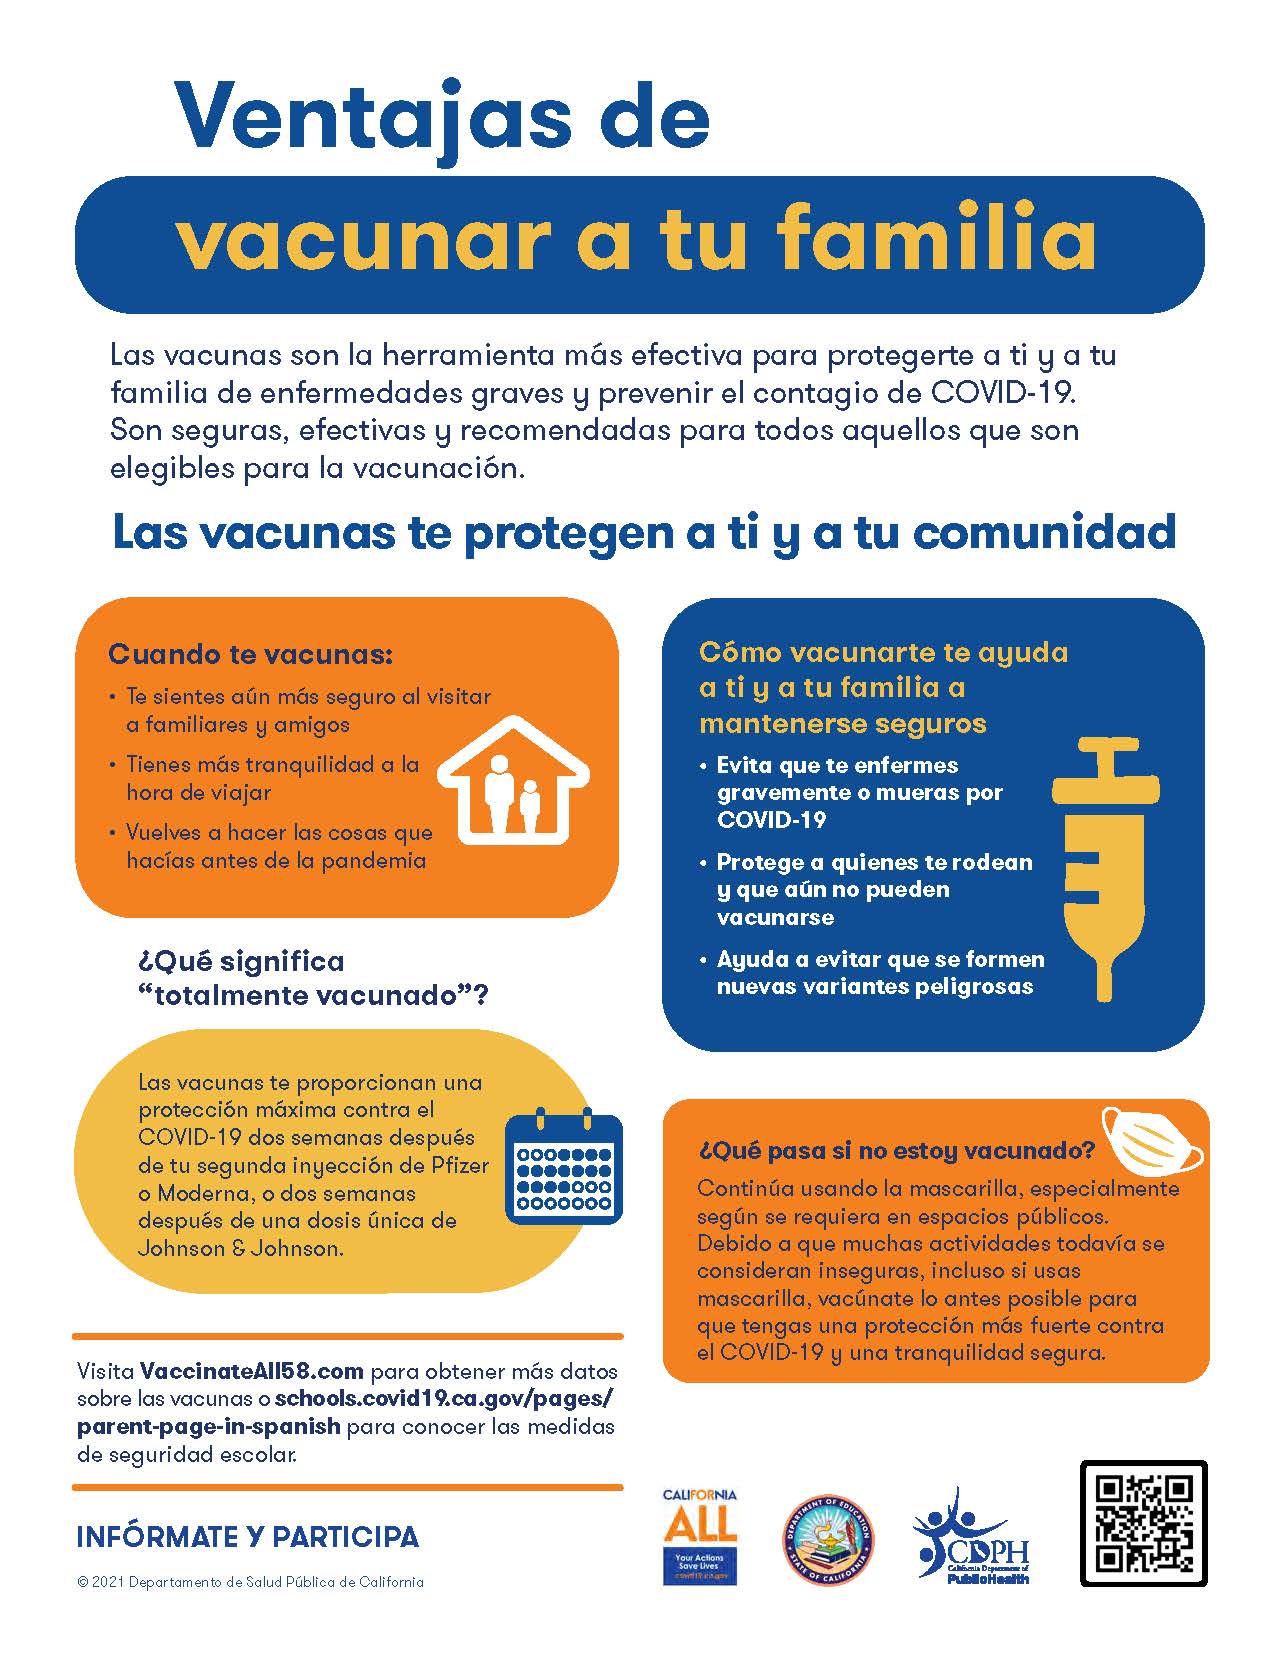 Ventajas de vacunar a tu familia